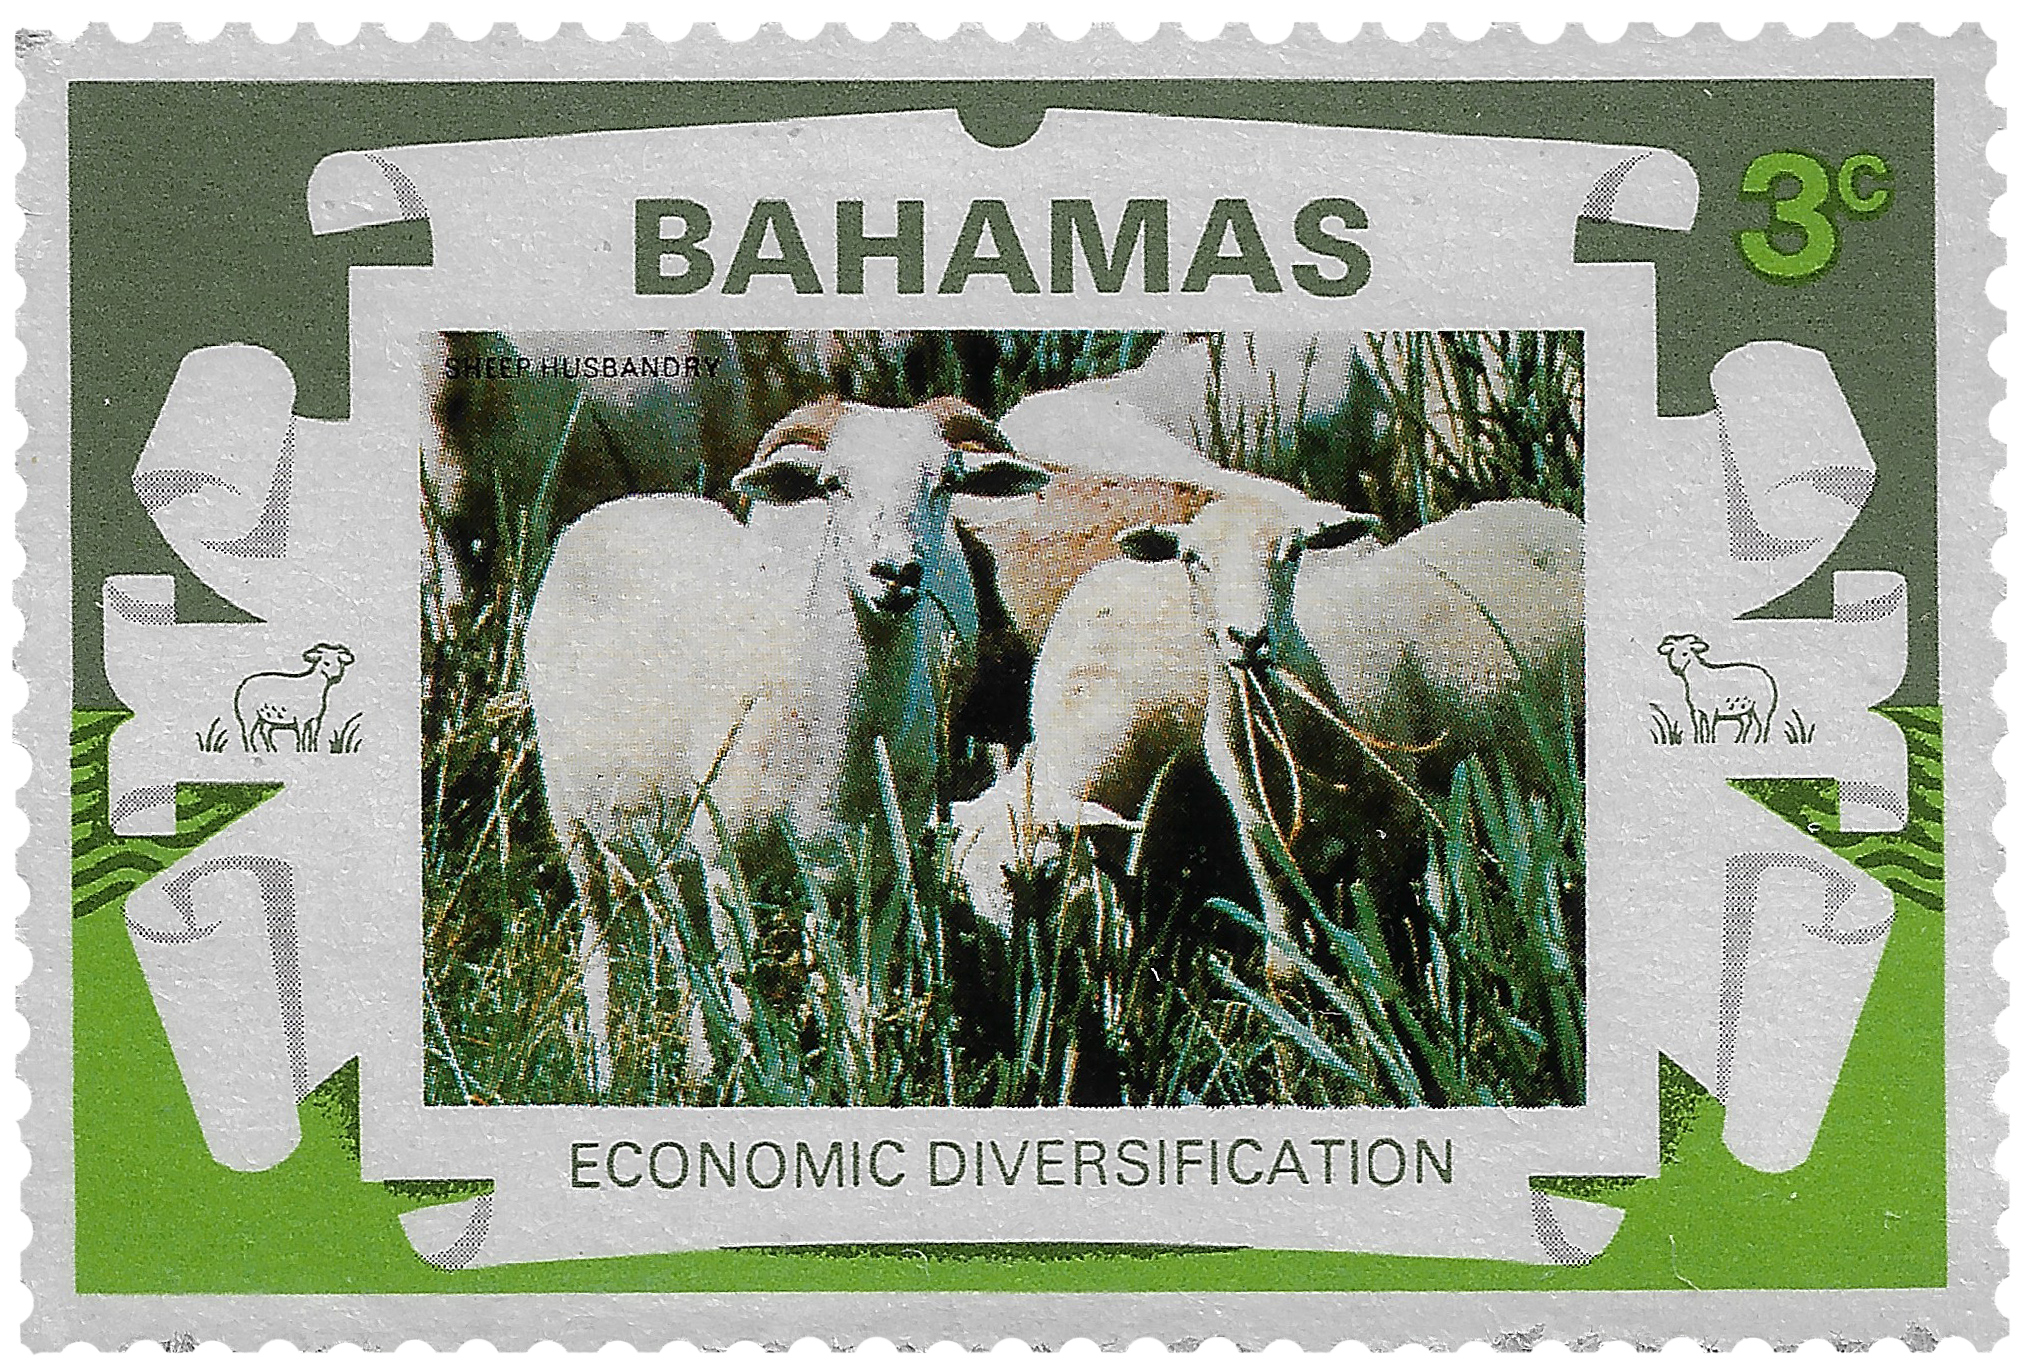 3c 1975, Economic Diversification, Sheep Husbandry